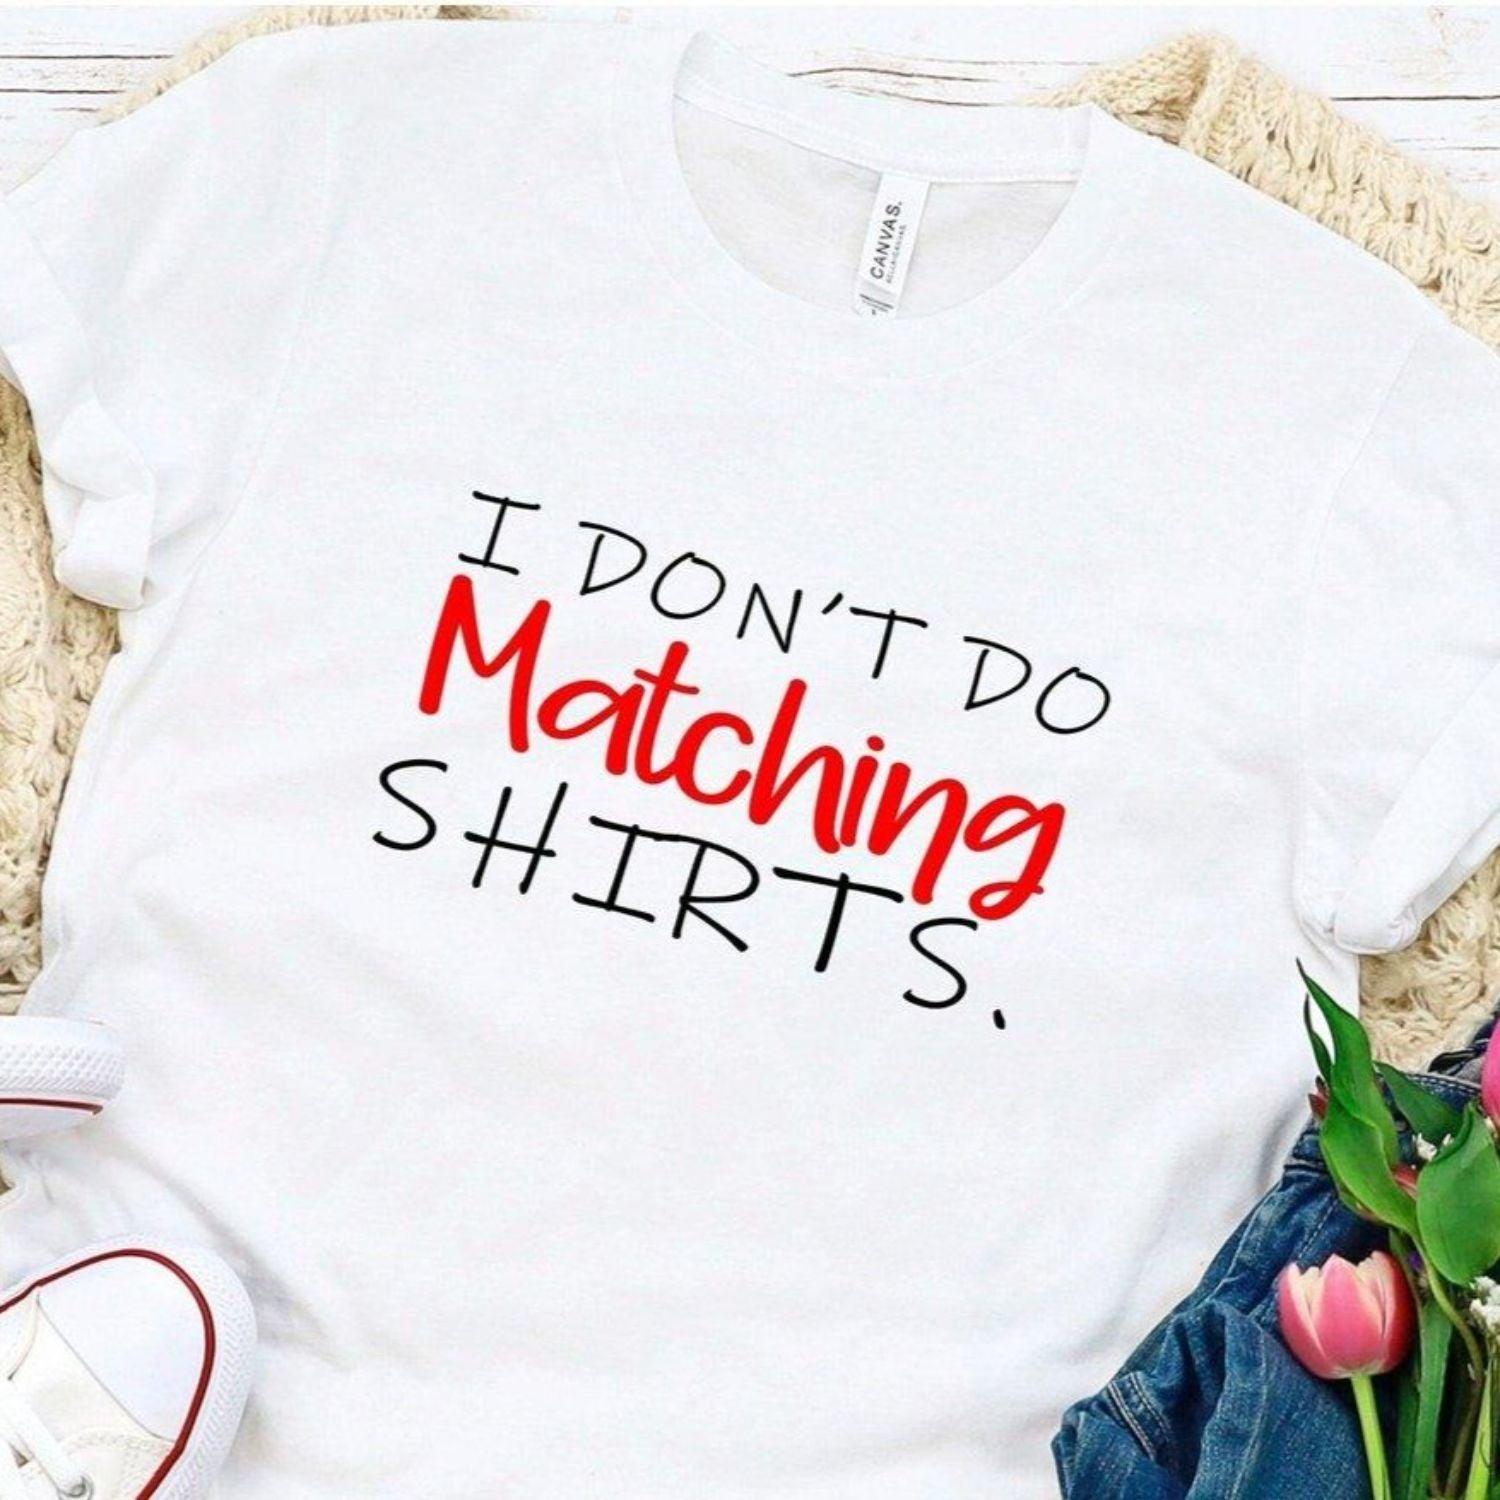 I Don't Do Matching Shirt Couple Shirts Matching Family Shirts for